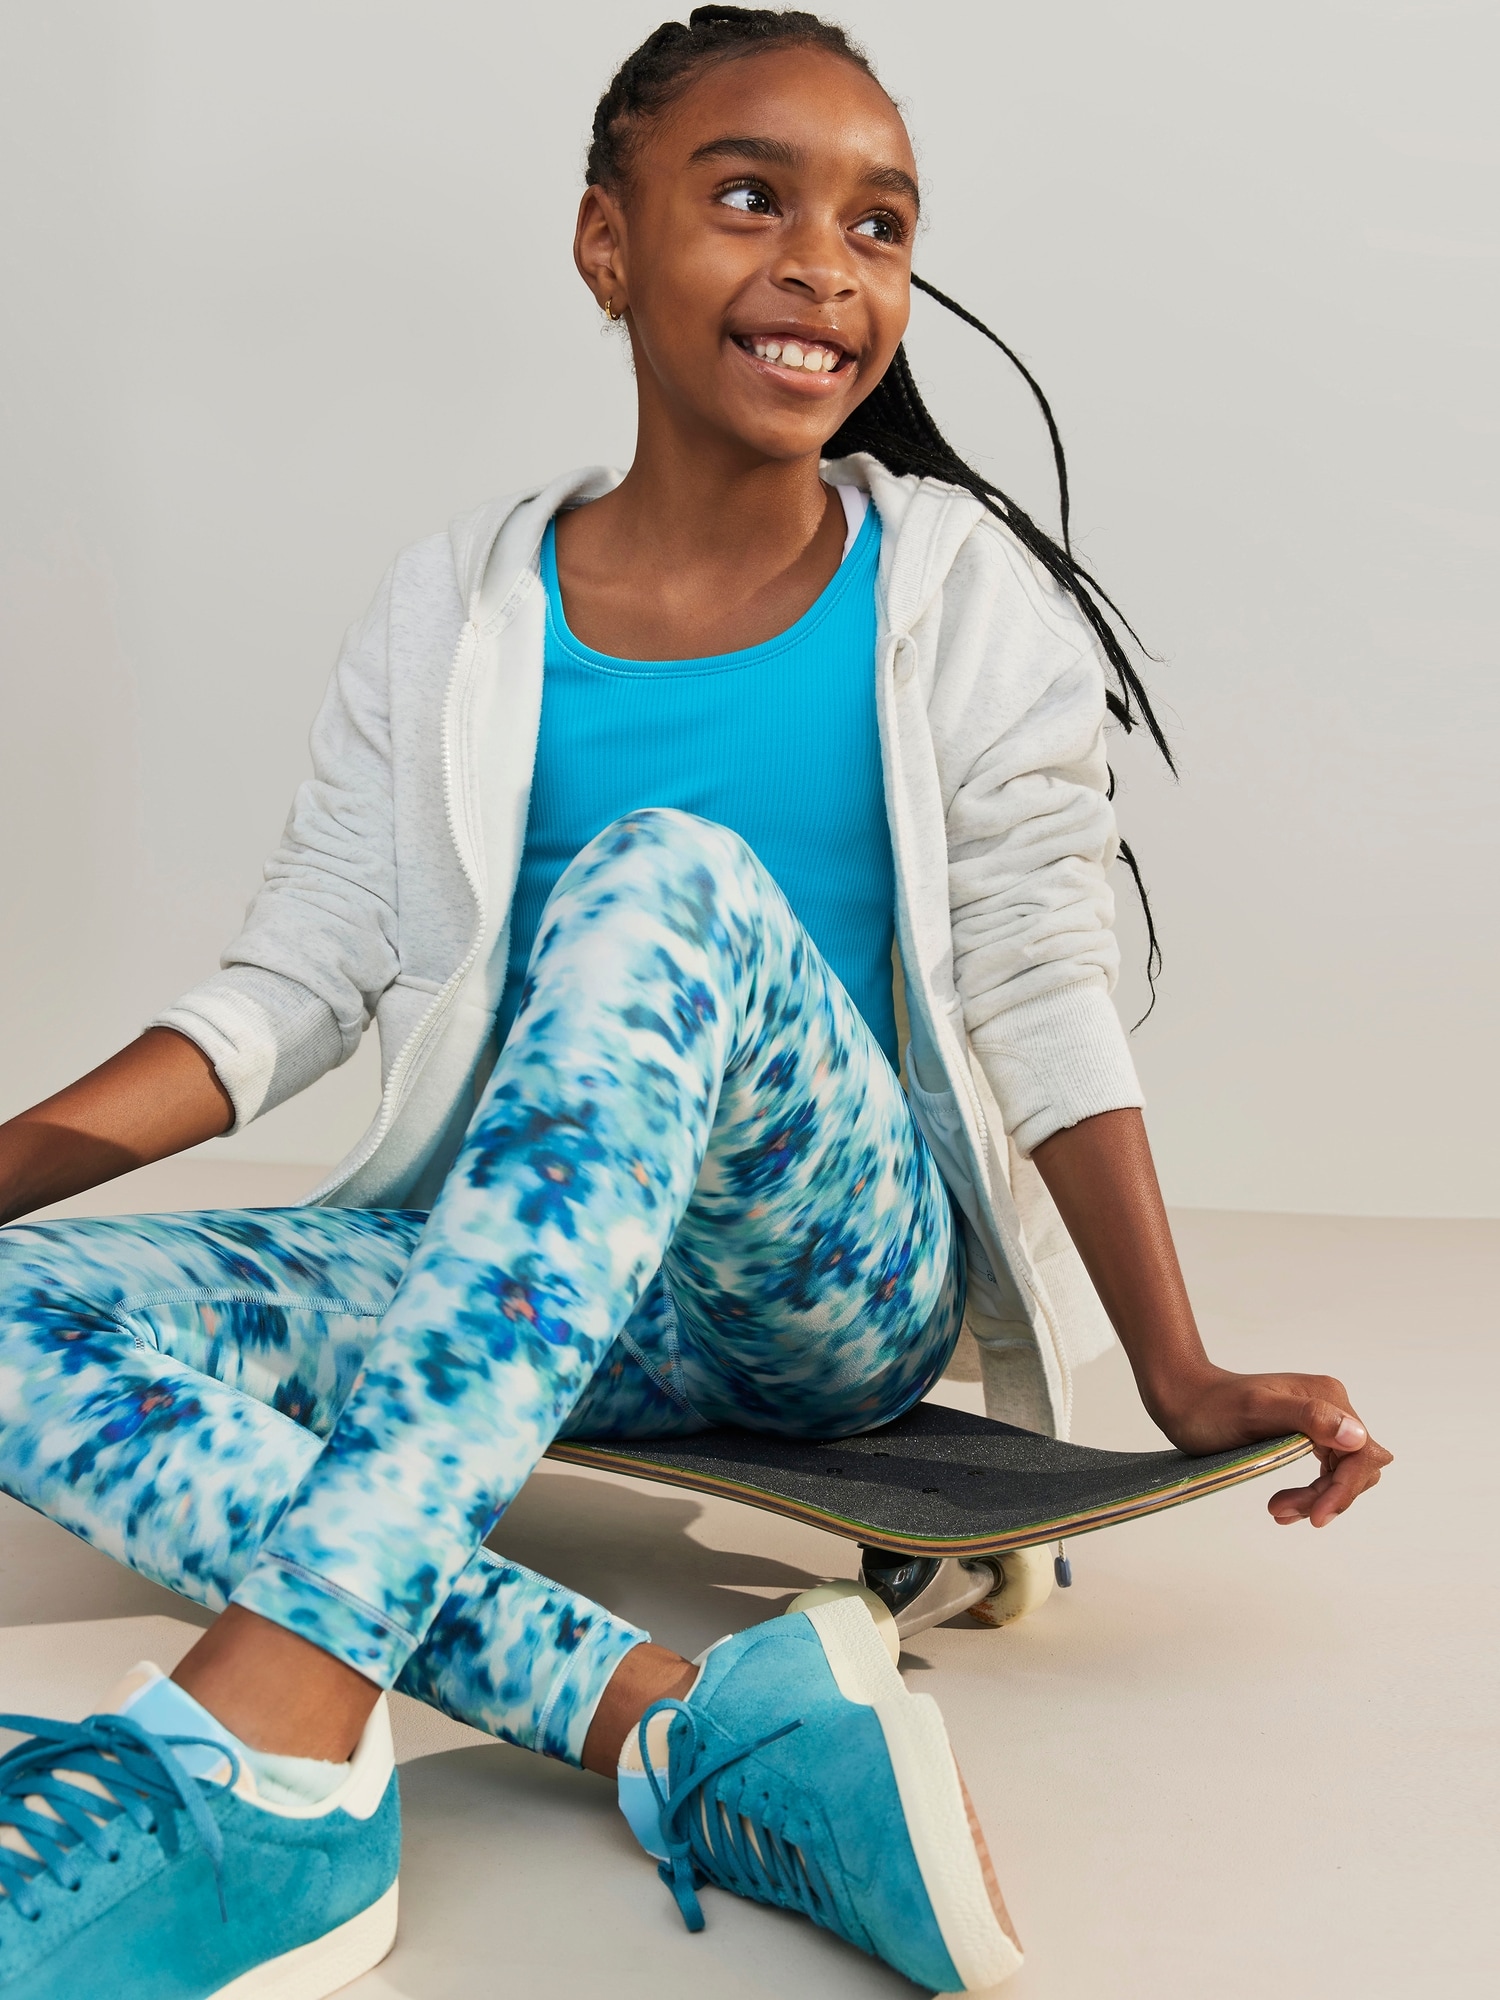 Athleta Girl Black Camo Print Chit Chat Tight Leggings